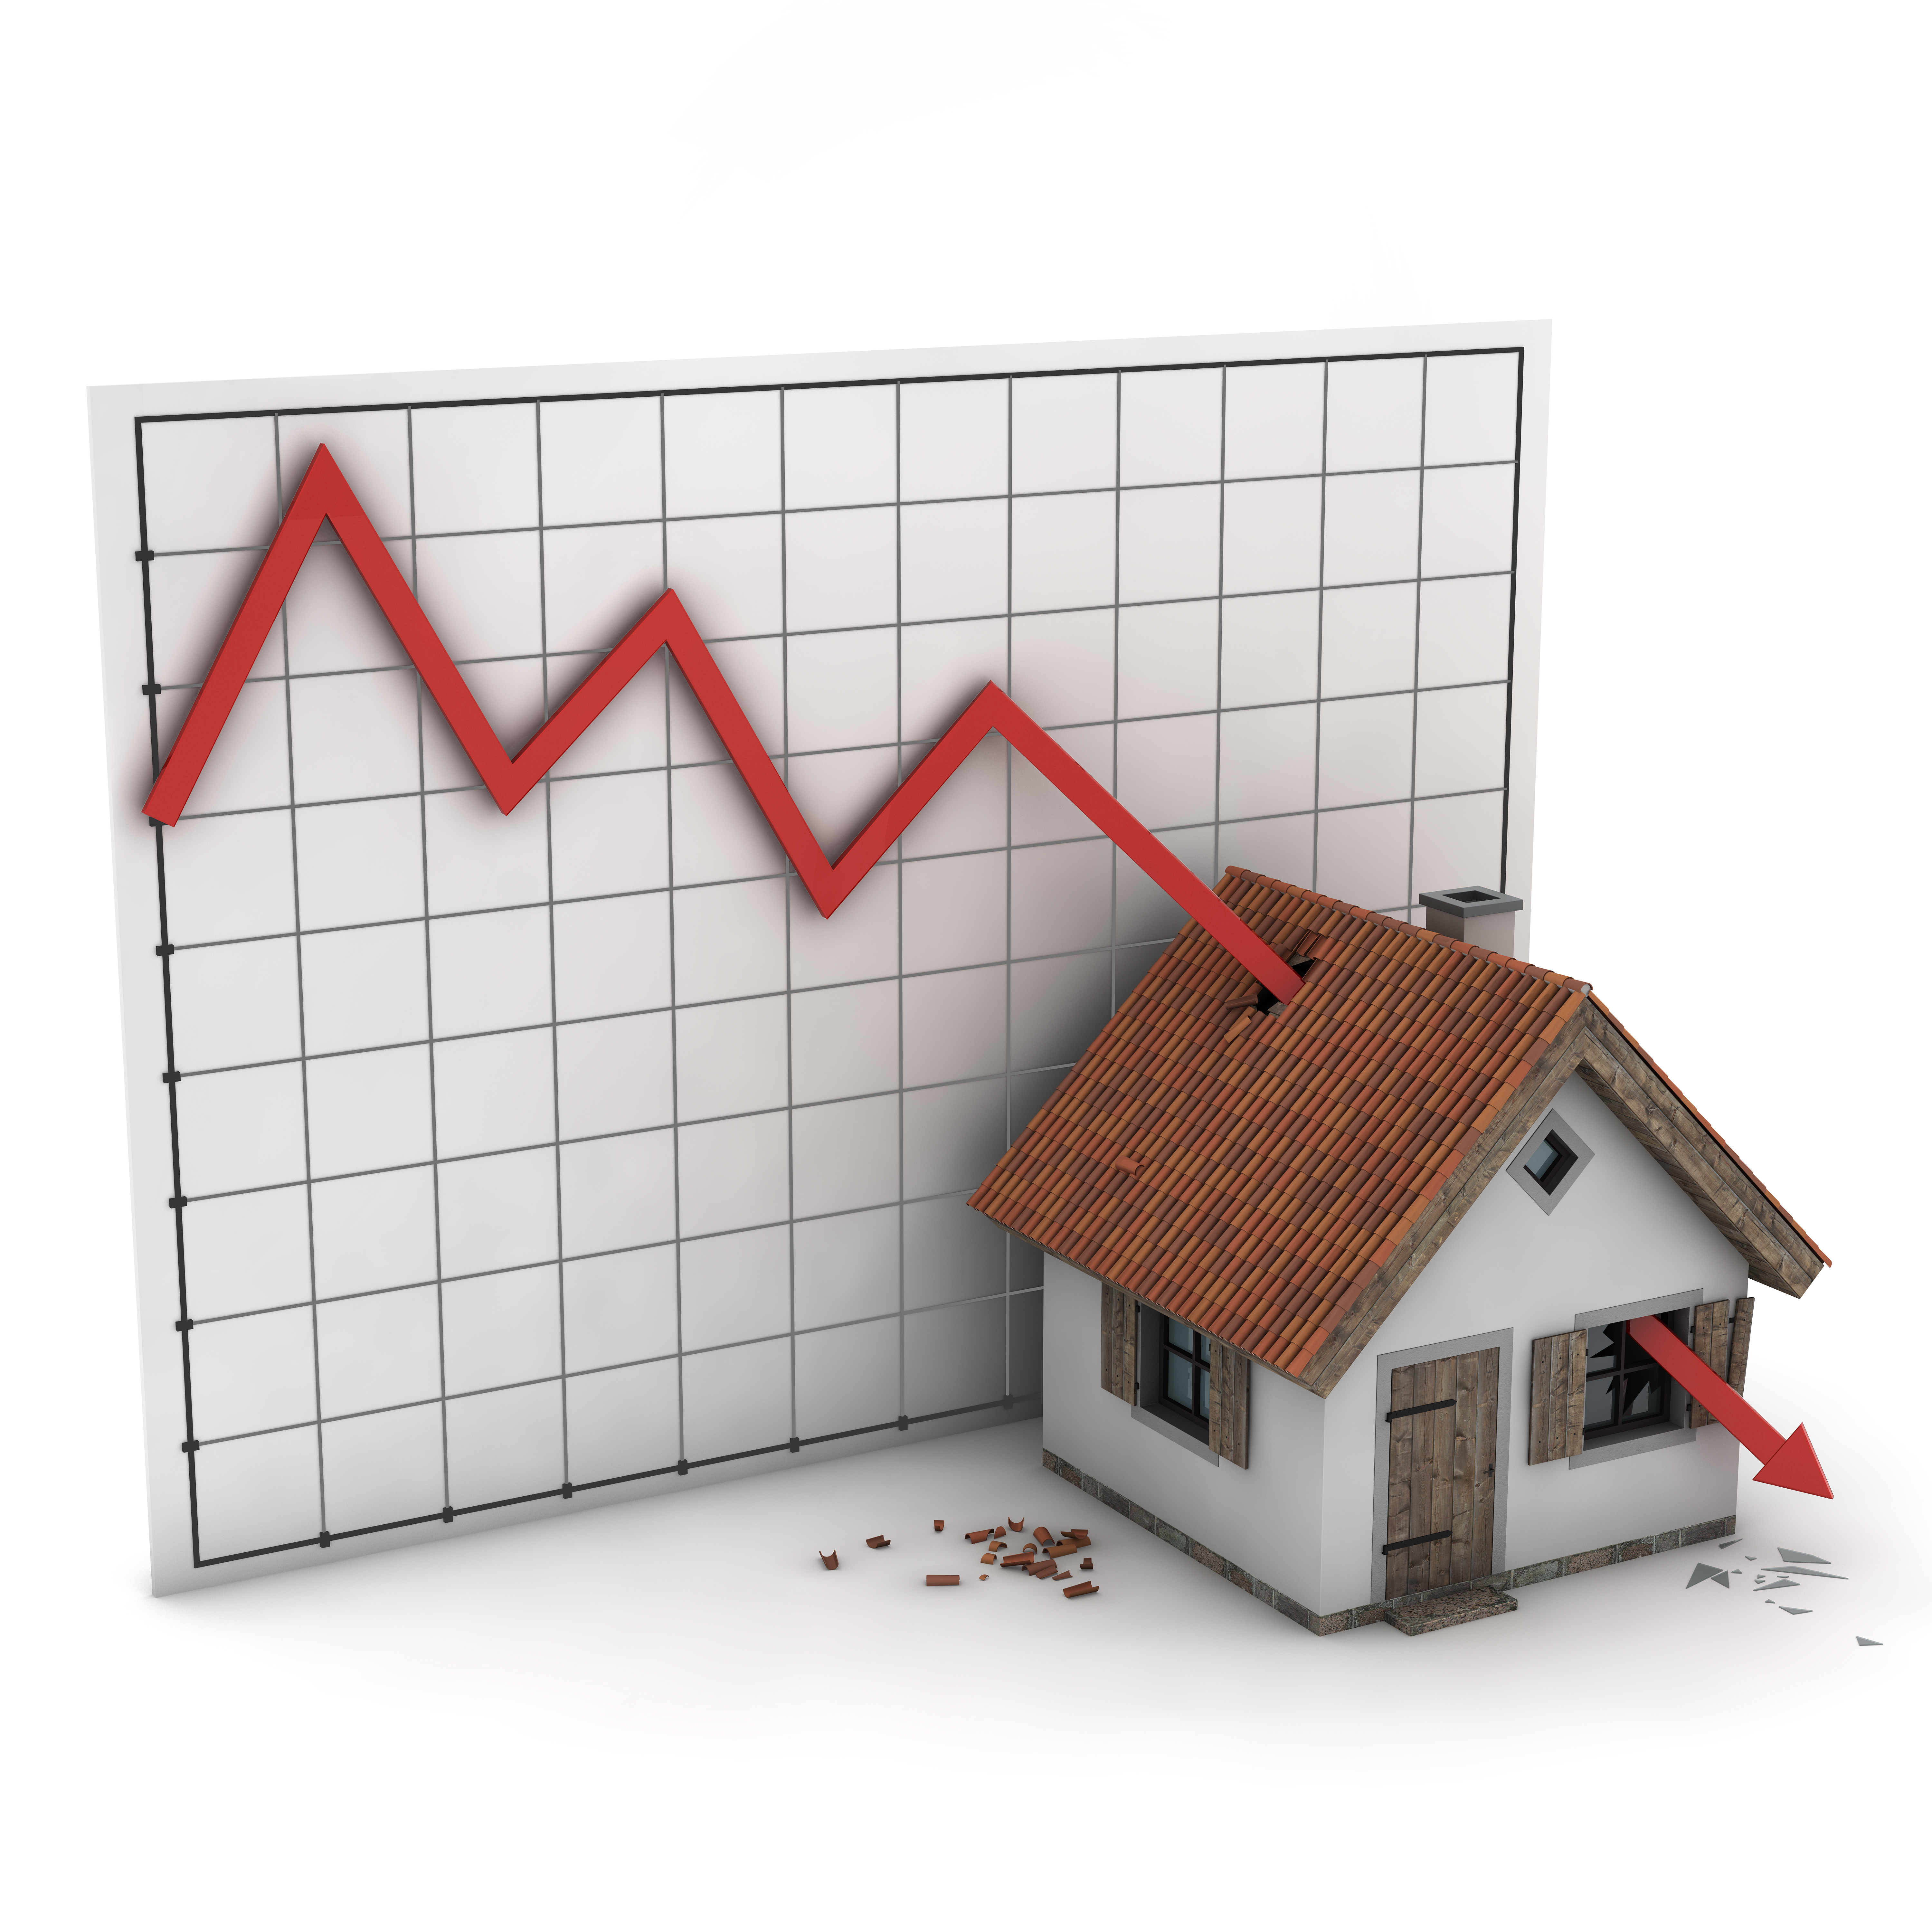 Повышение цены аренды